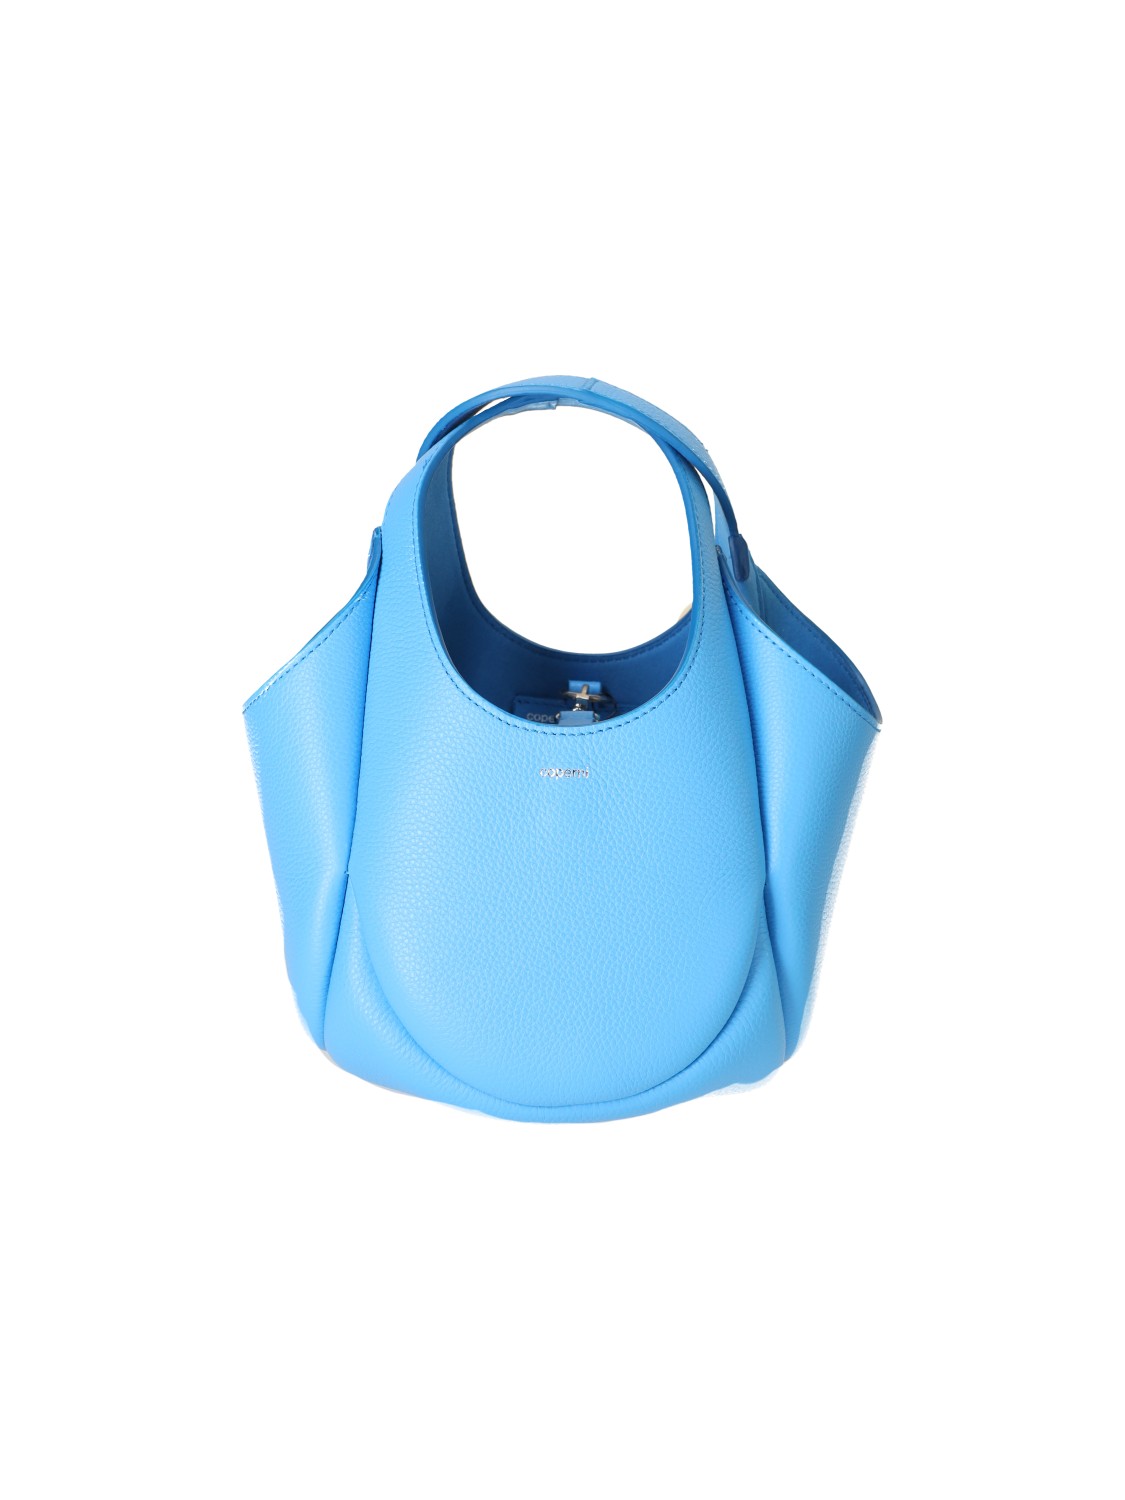 Coperni Mini Bucket Bag - Leather handbag  blue One Size